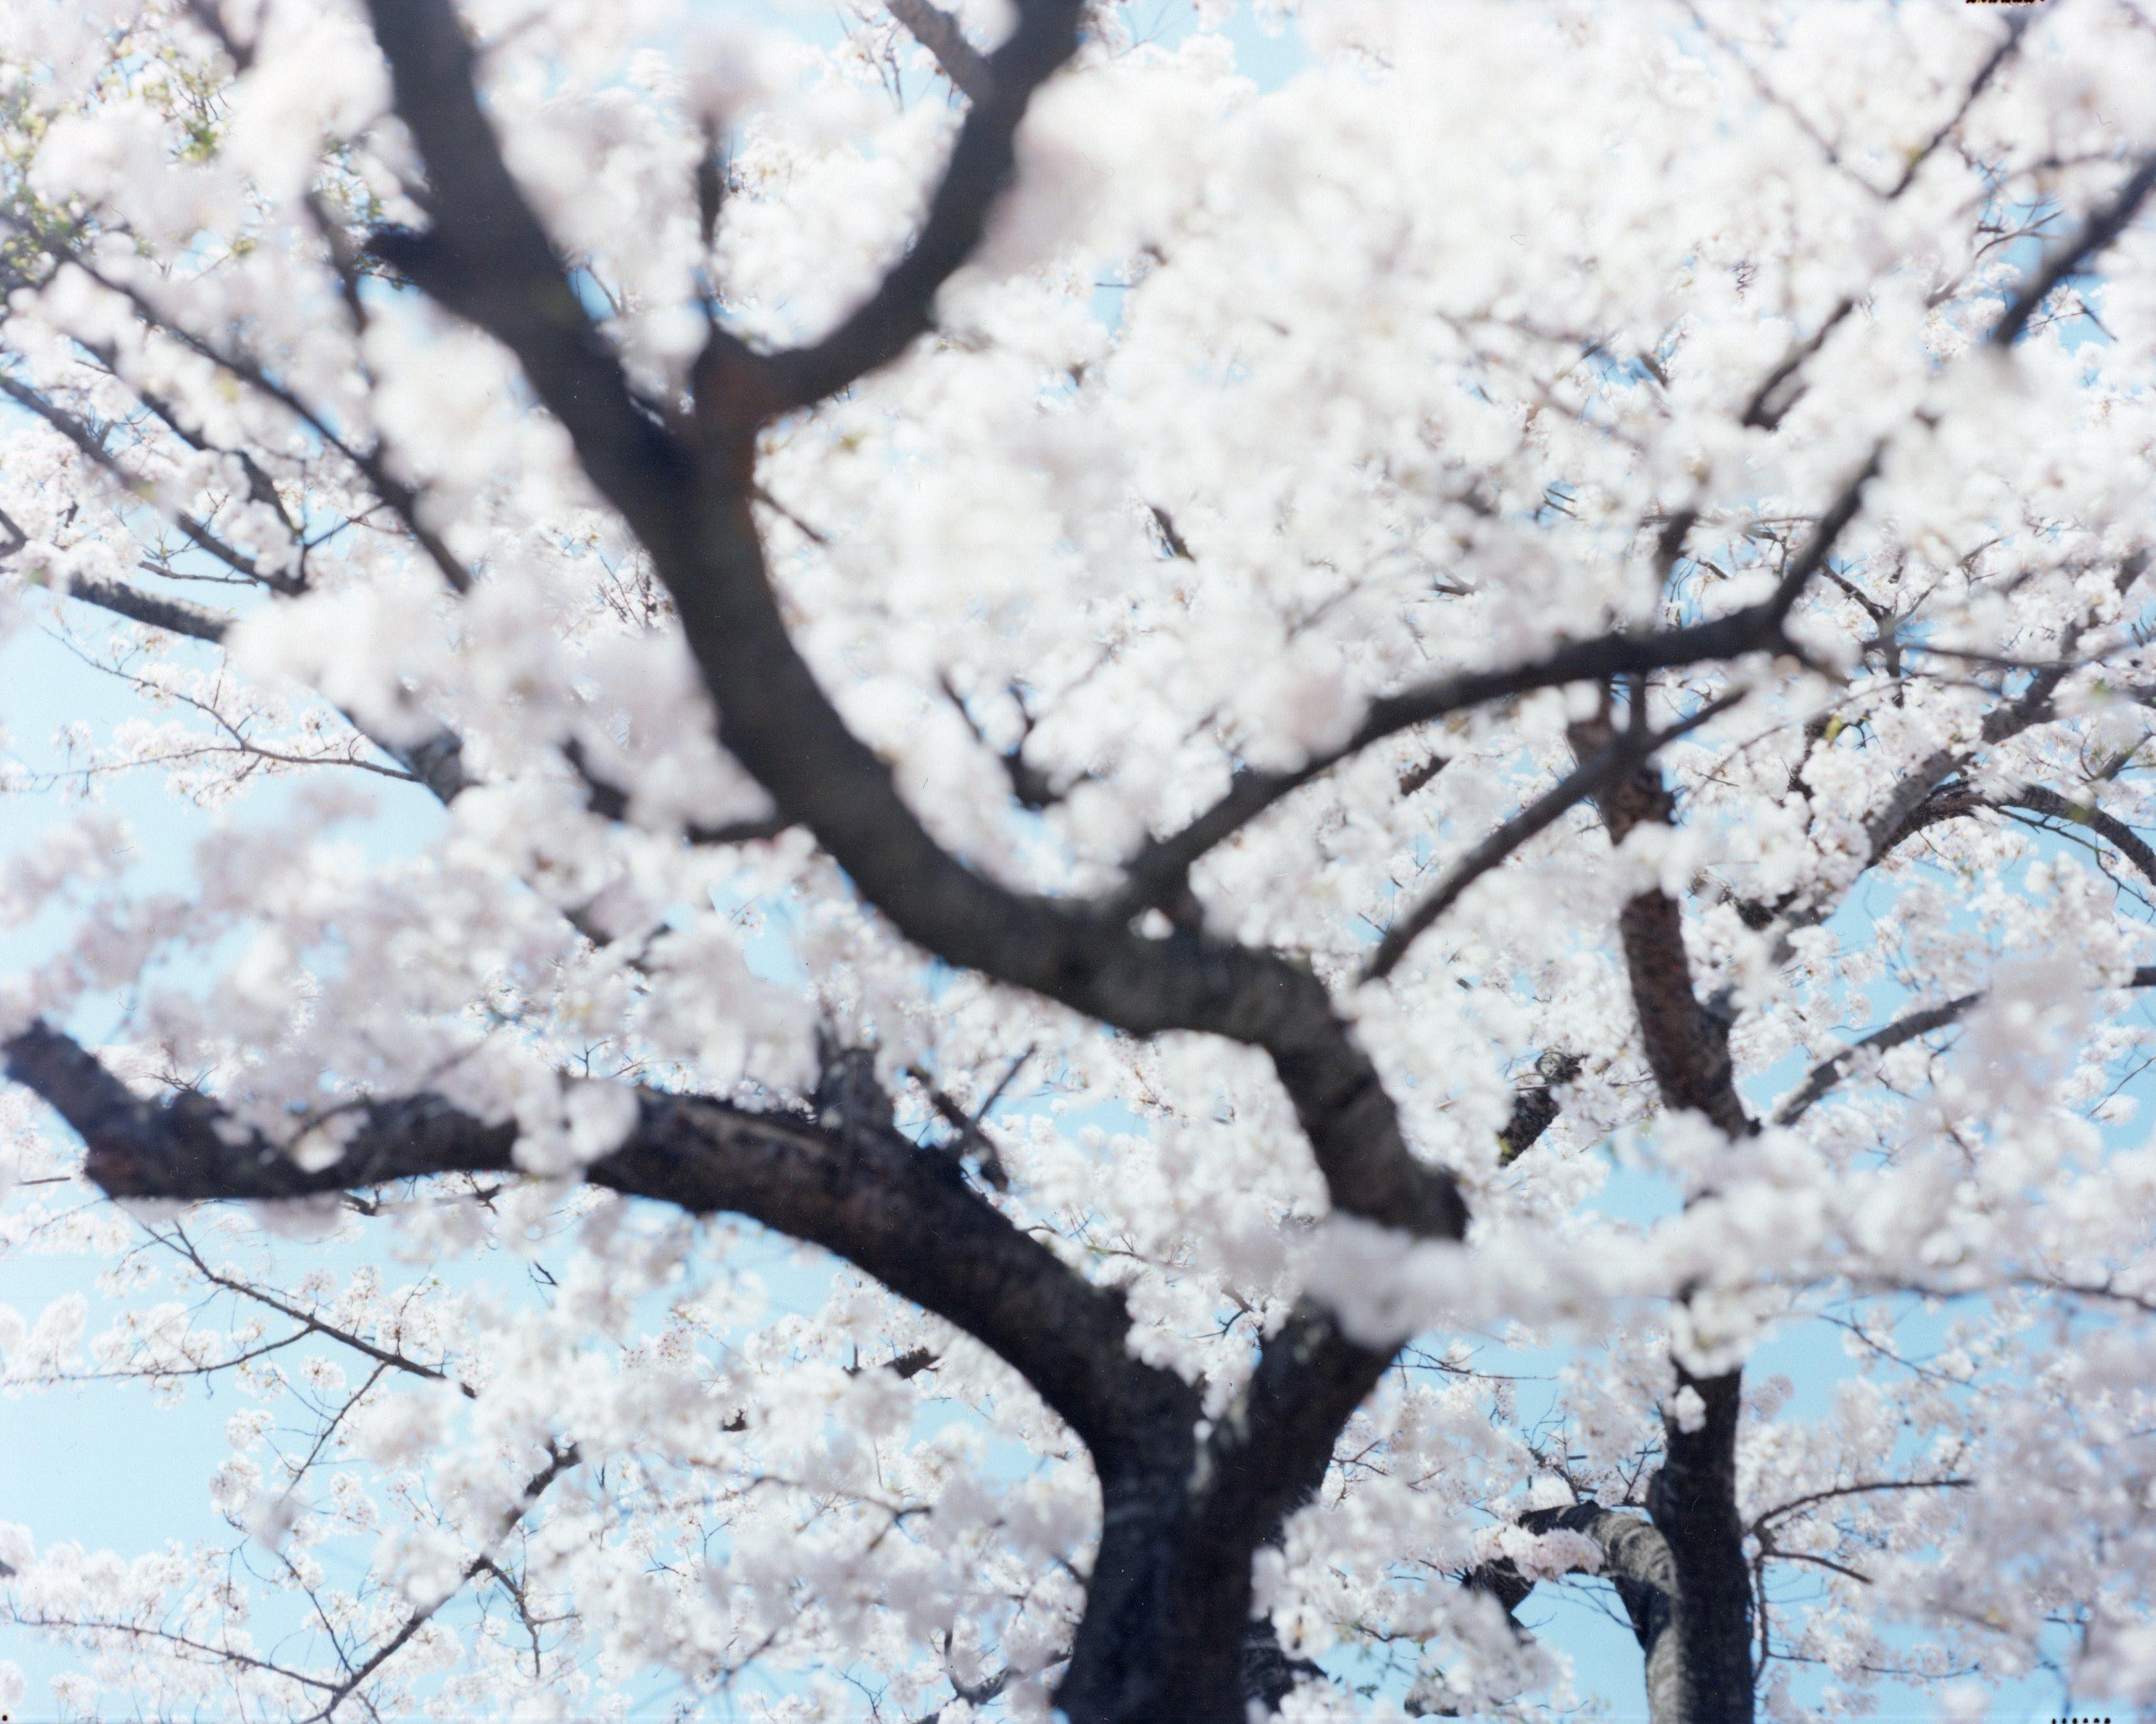 SAKURA 21, 4-585 – Risaku Suzuki, Nature, Spring, Cherry Blossom, Sakura, Japan